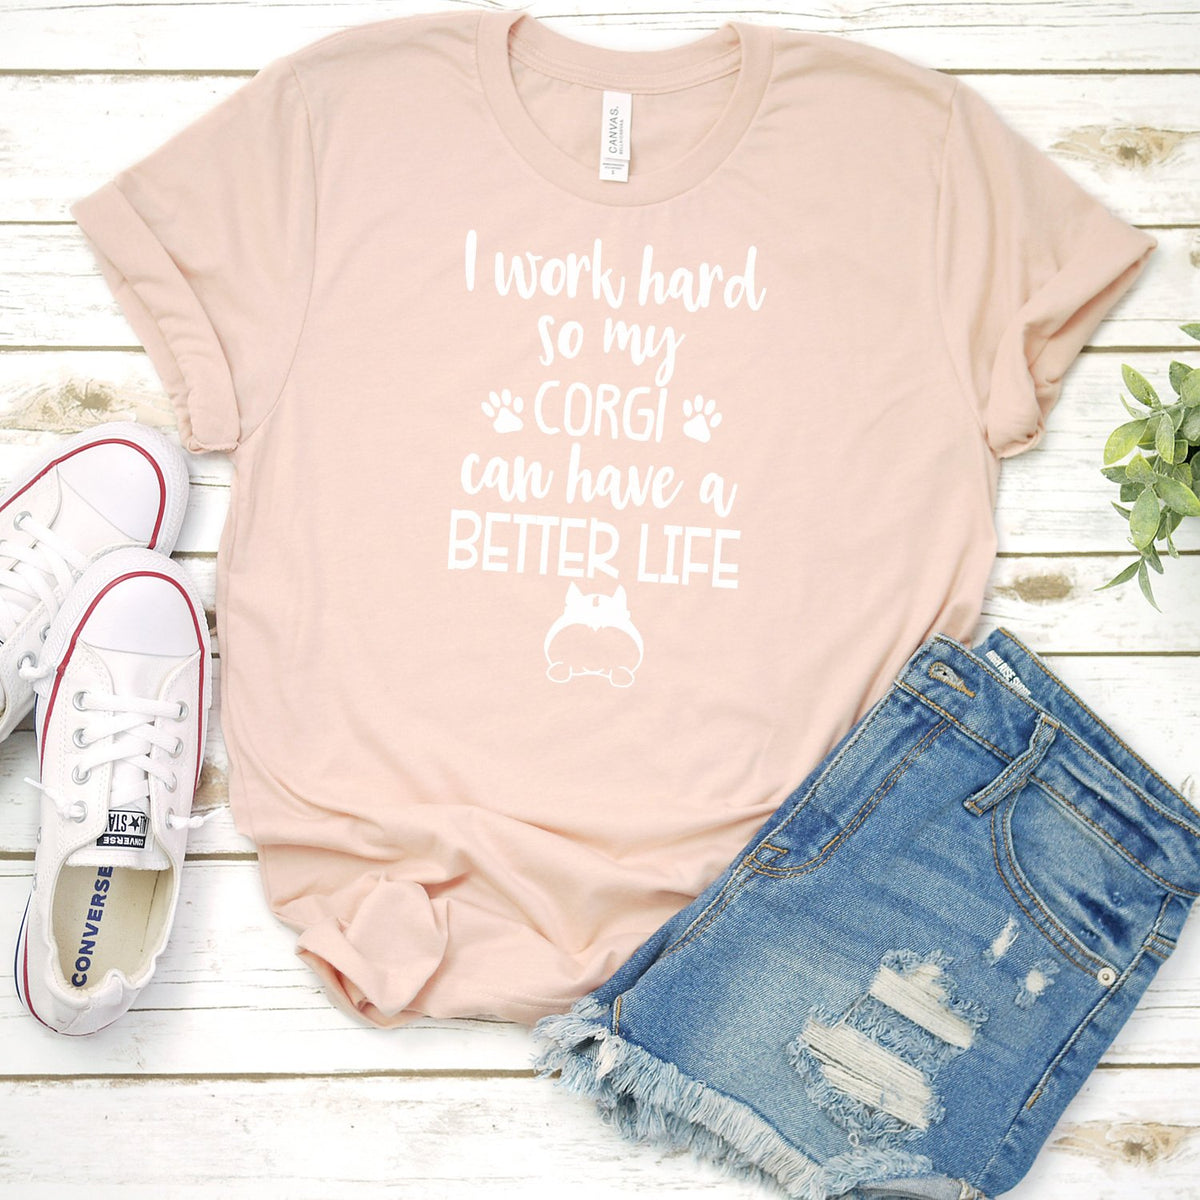 I Work Hard So My Corgi Can Have A Better Life - Short Sleeve Tee Shirt